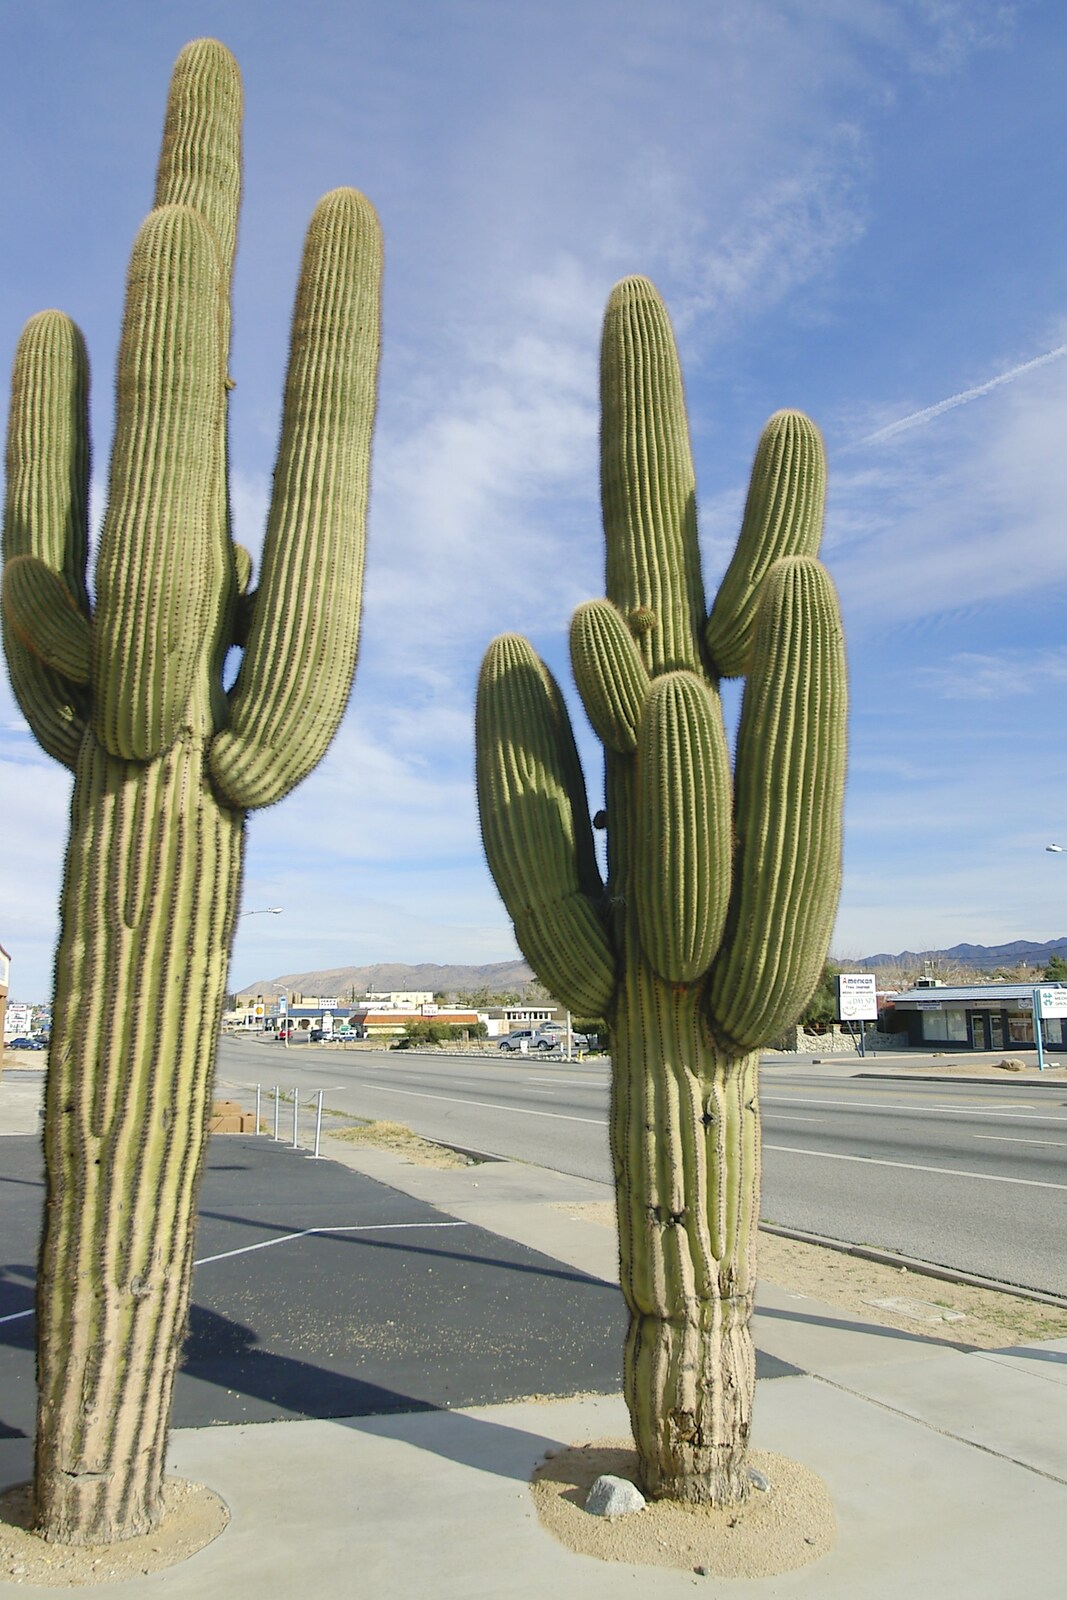 Two impressive cacti from Mojave Desert: San Diego to Joshua Tree and Twentynine Palms, California, US - 5th March 2006